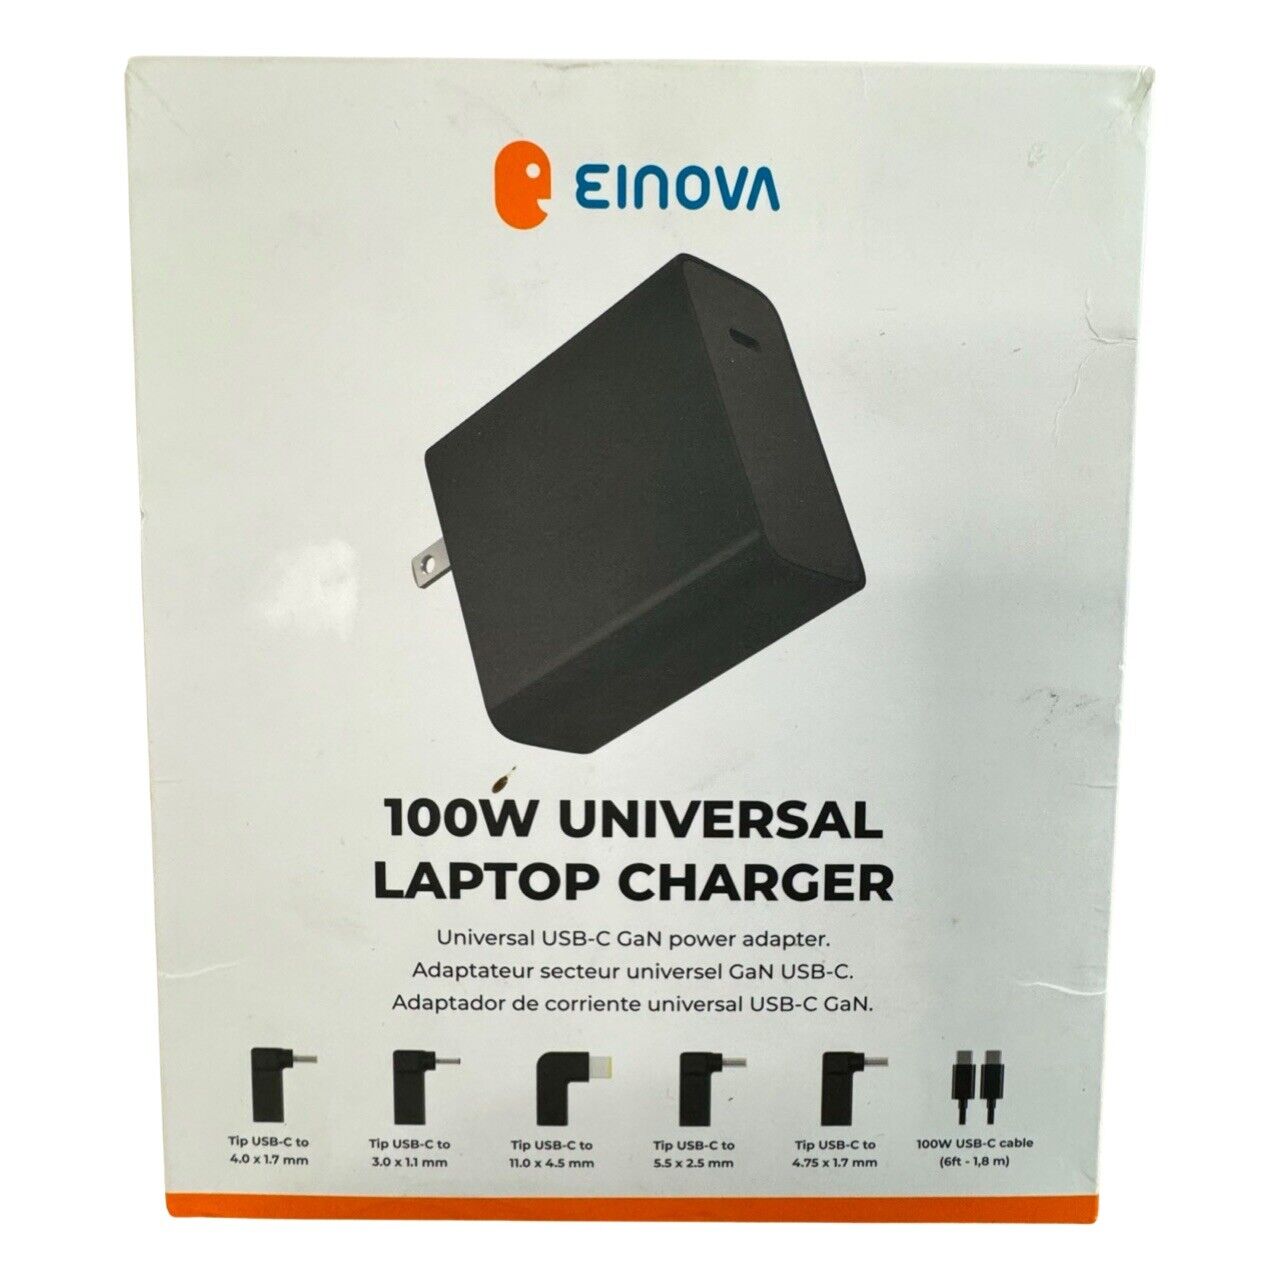 Einova 100W Universal Laptop Charger- Black